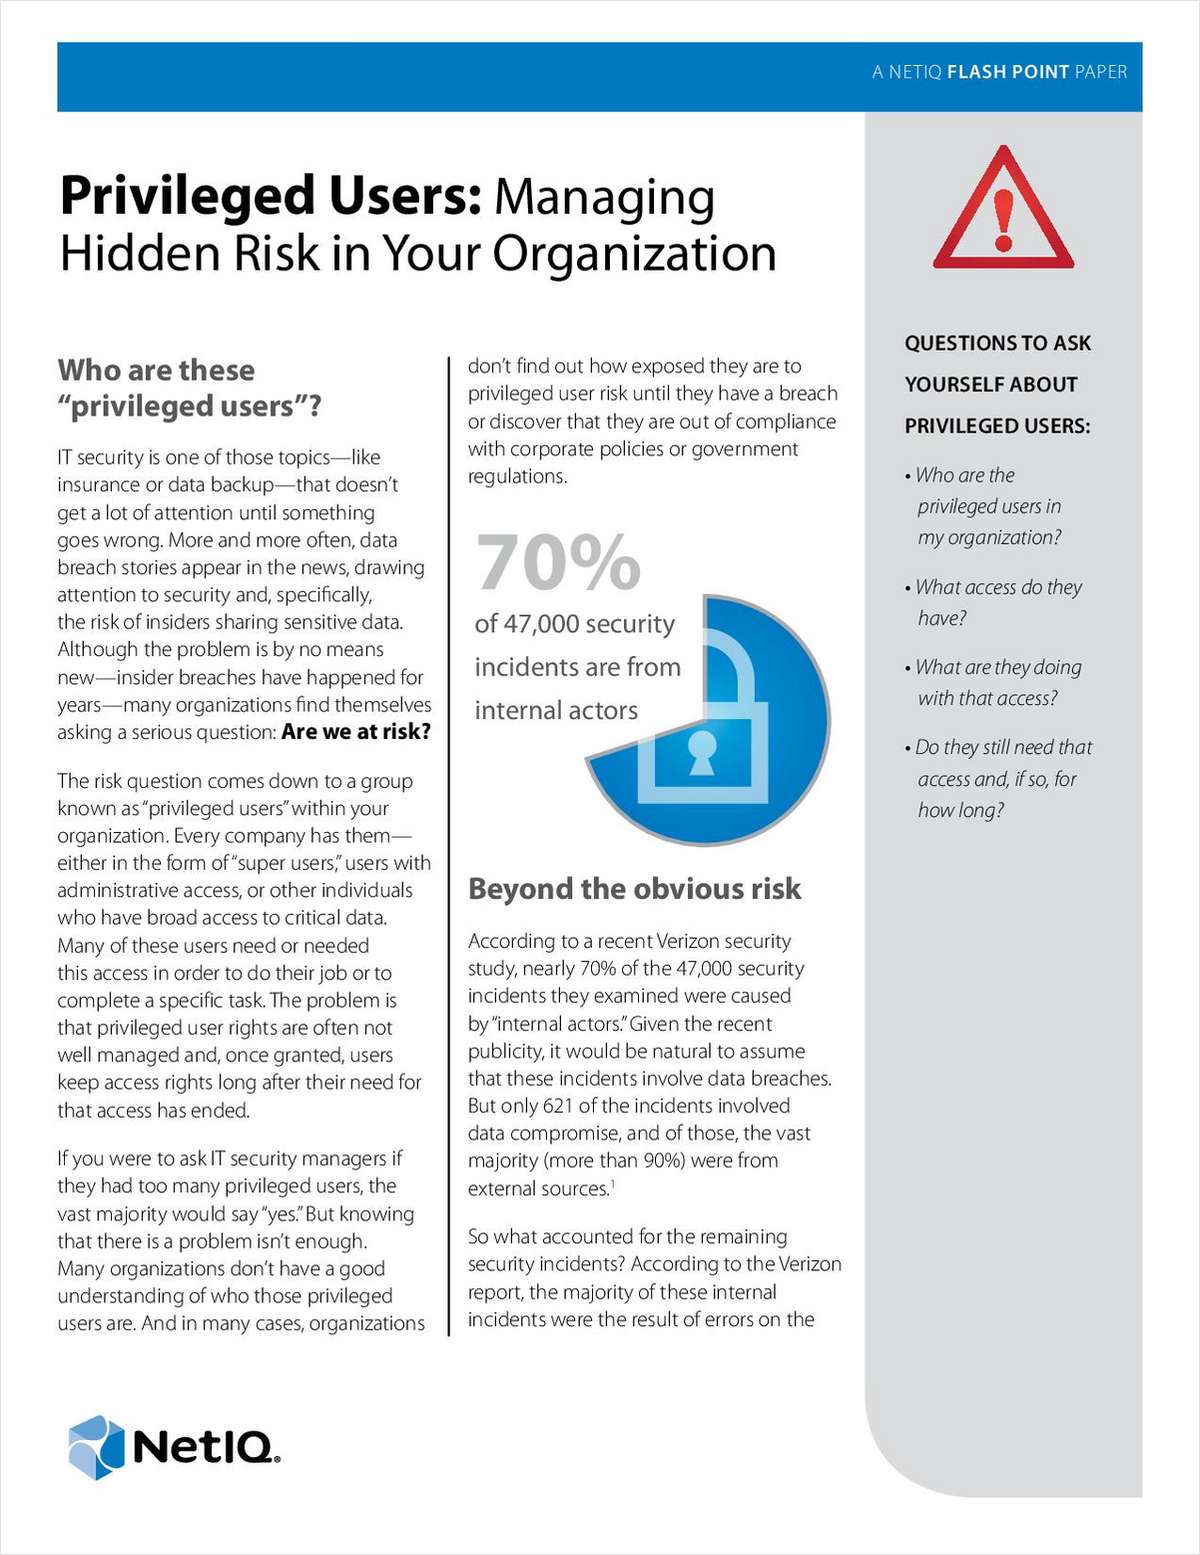 Privileged Users: Managing Hidden Risk in Your Organization